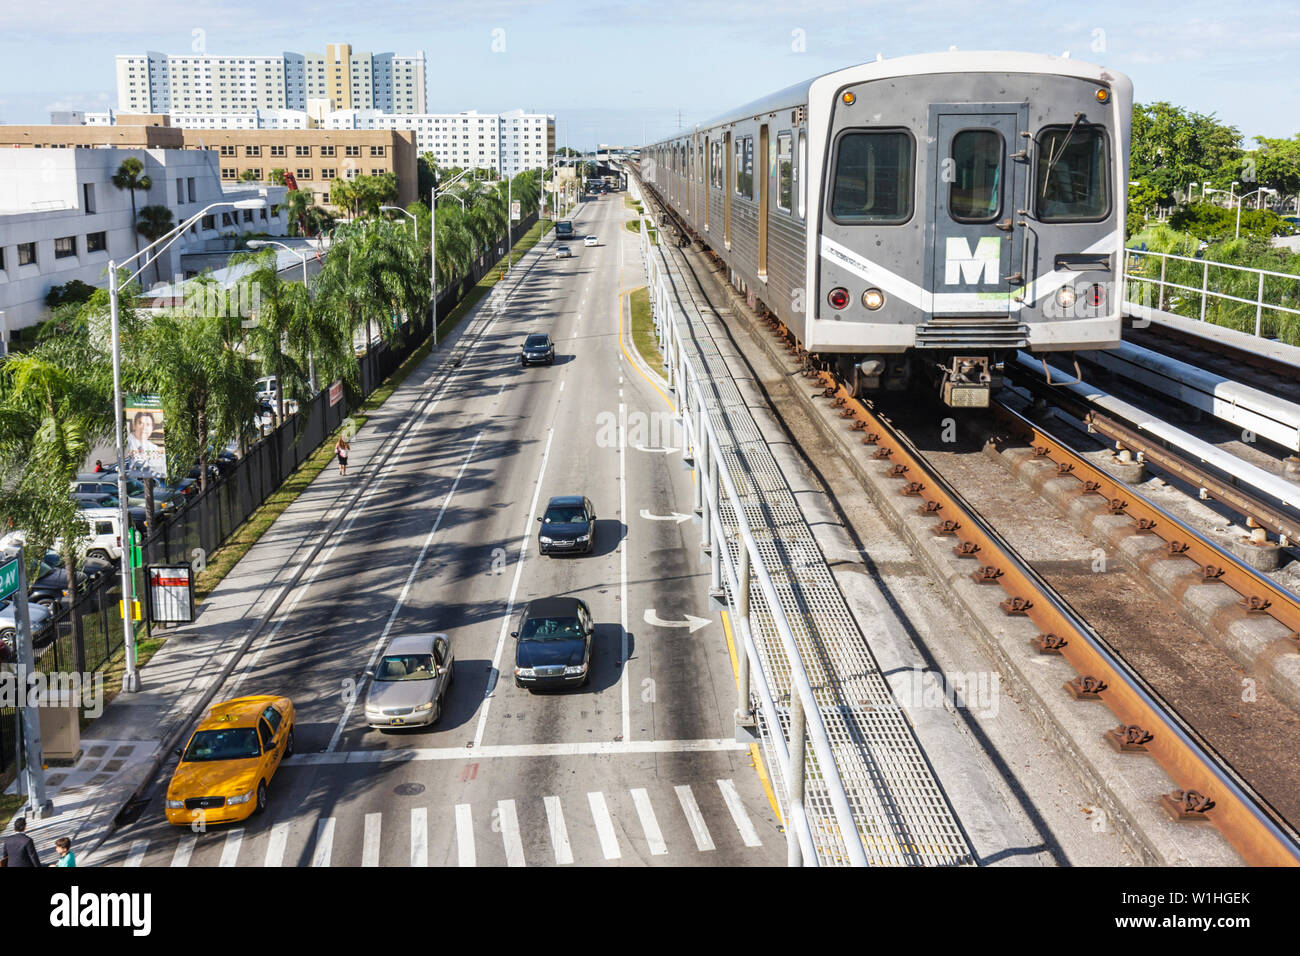 Miami Florida,Metrorail,NW 12th Avenue,mass transit,elevated rail system,train track,street,car,traffic,FL091025009 Stock Photo